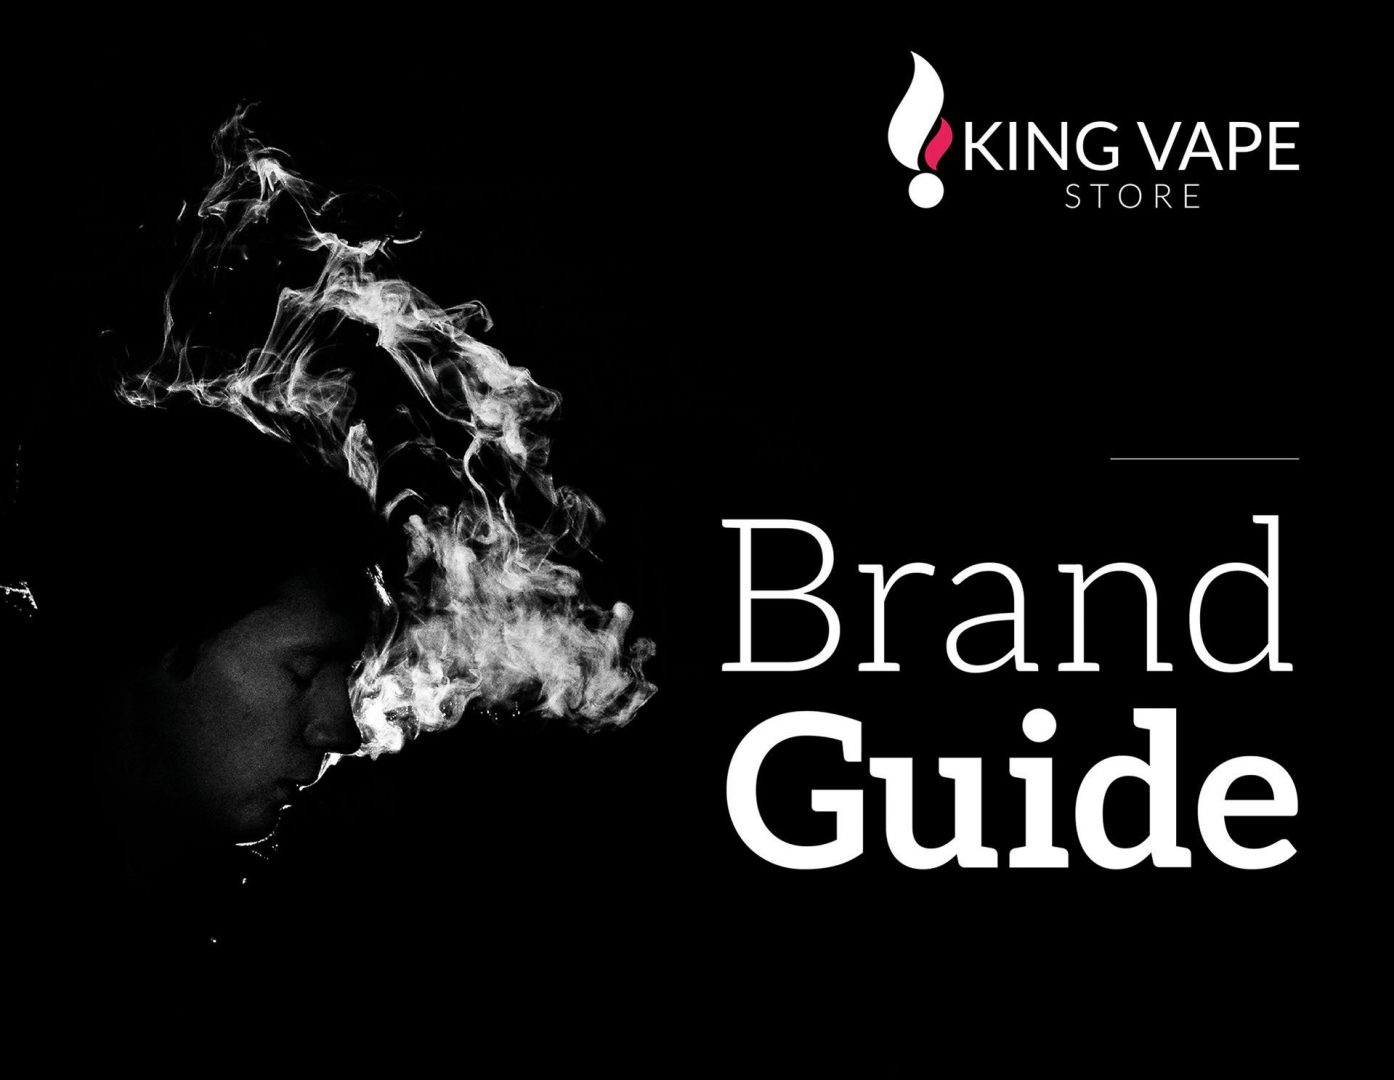 King Vape Store - King Vape Brand Guide 01 - Zera Creative